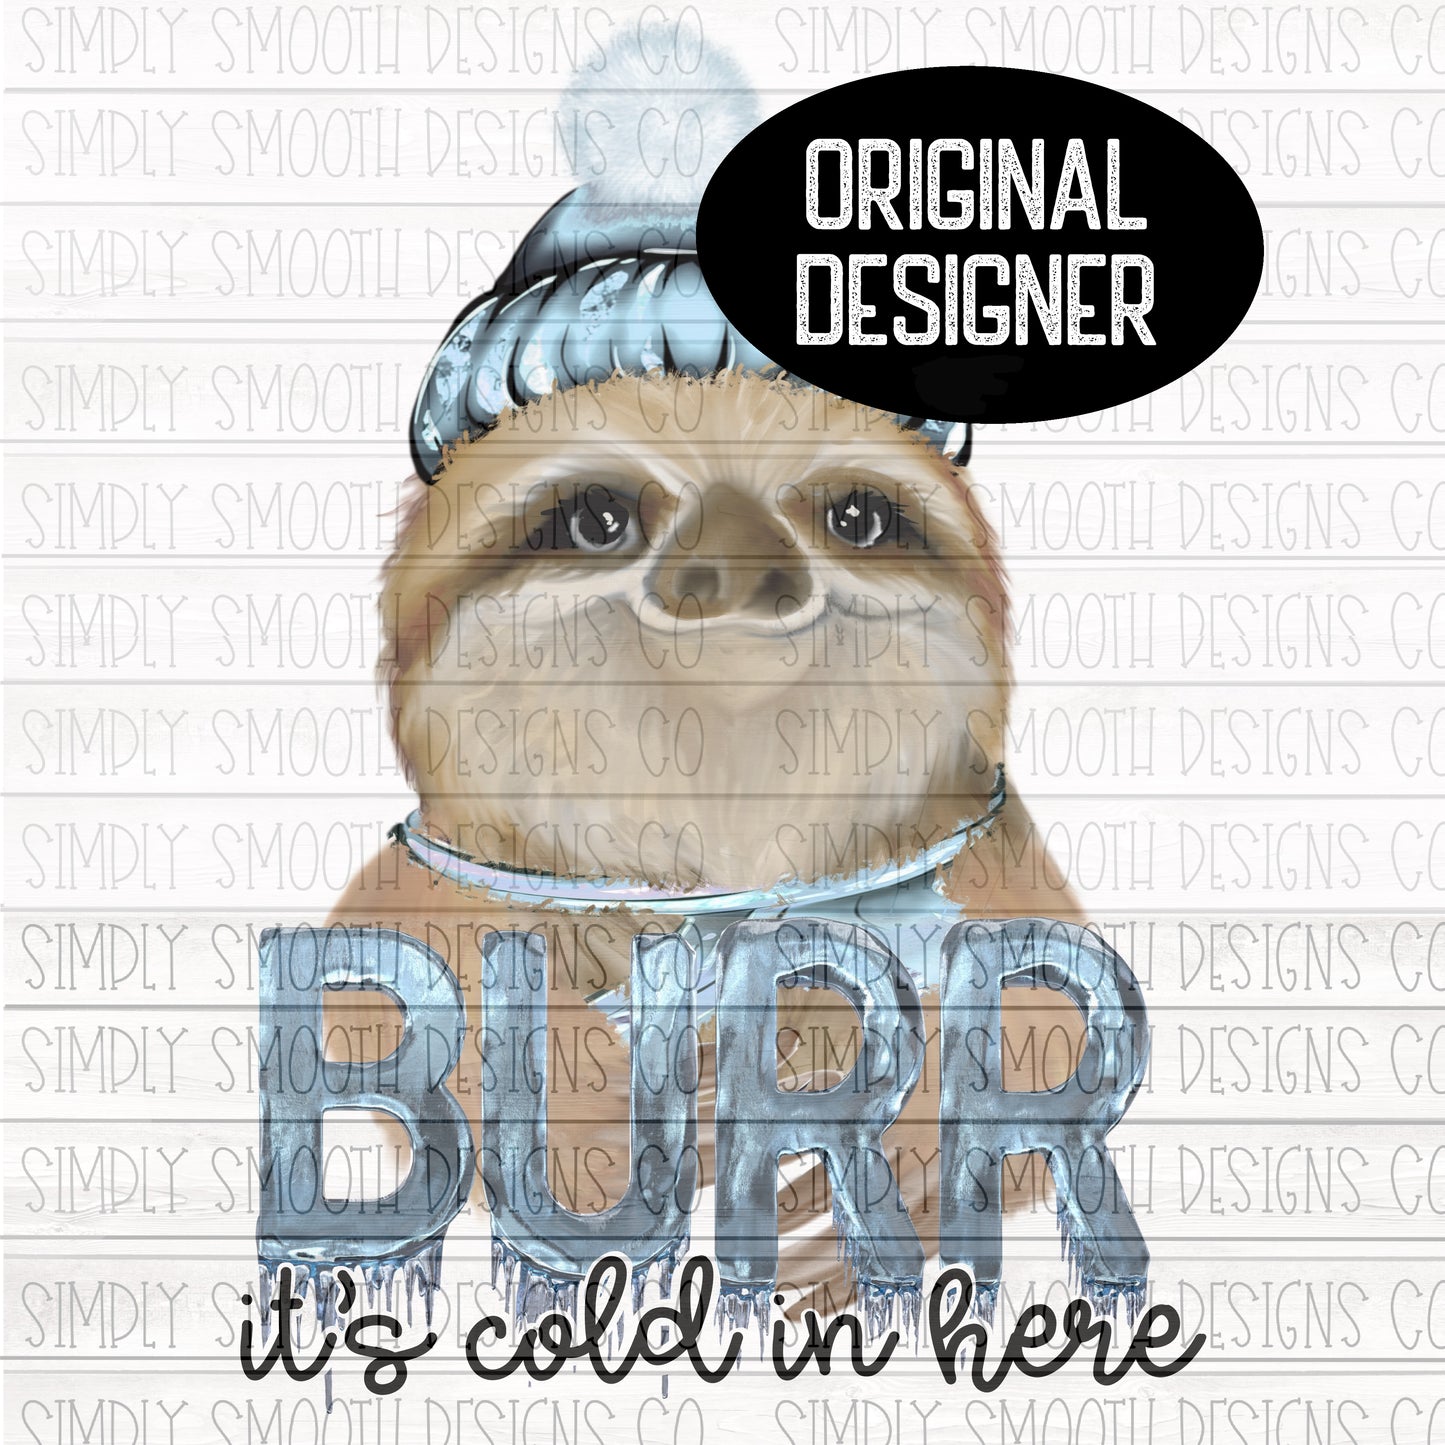 Cold Sloth Burr Brr